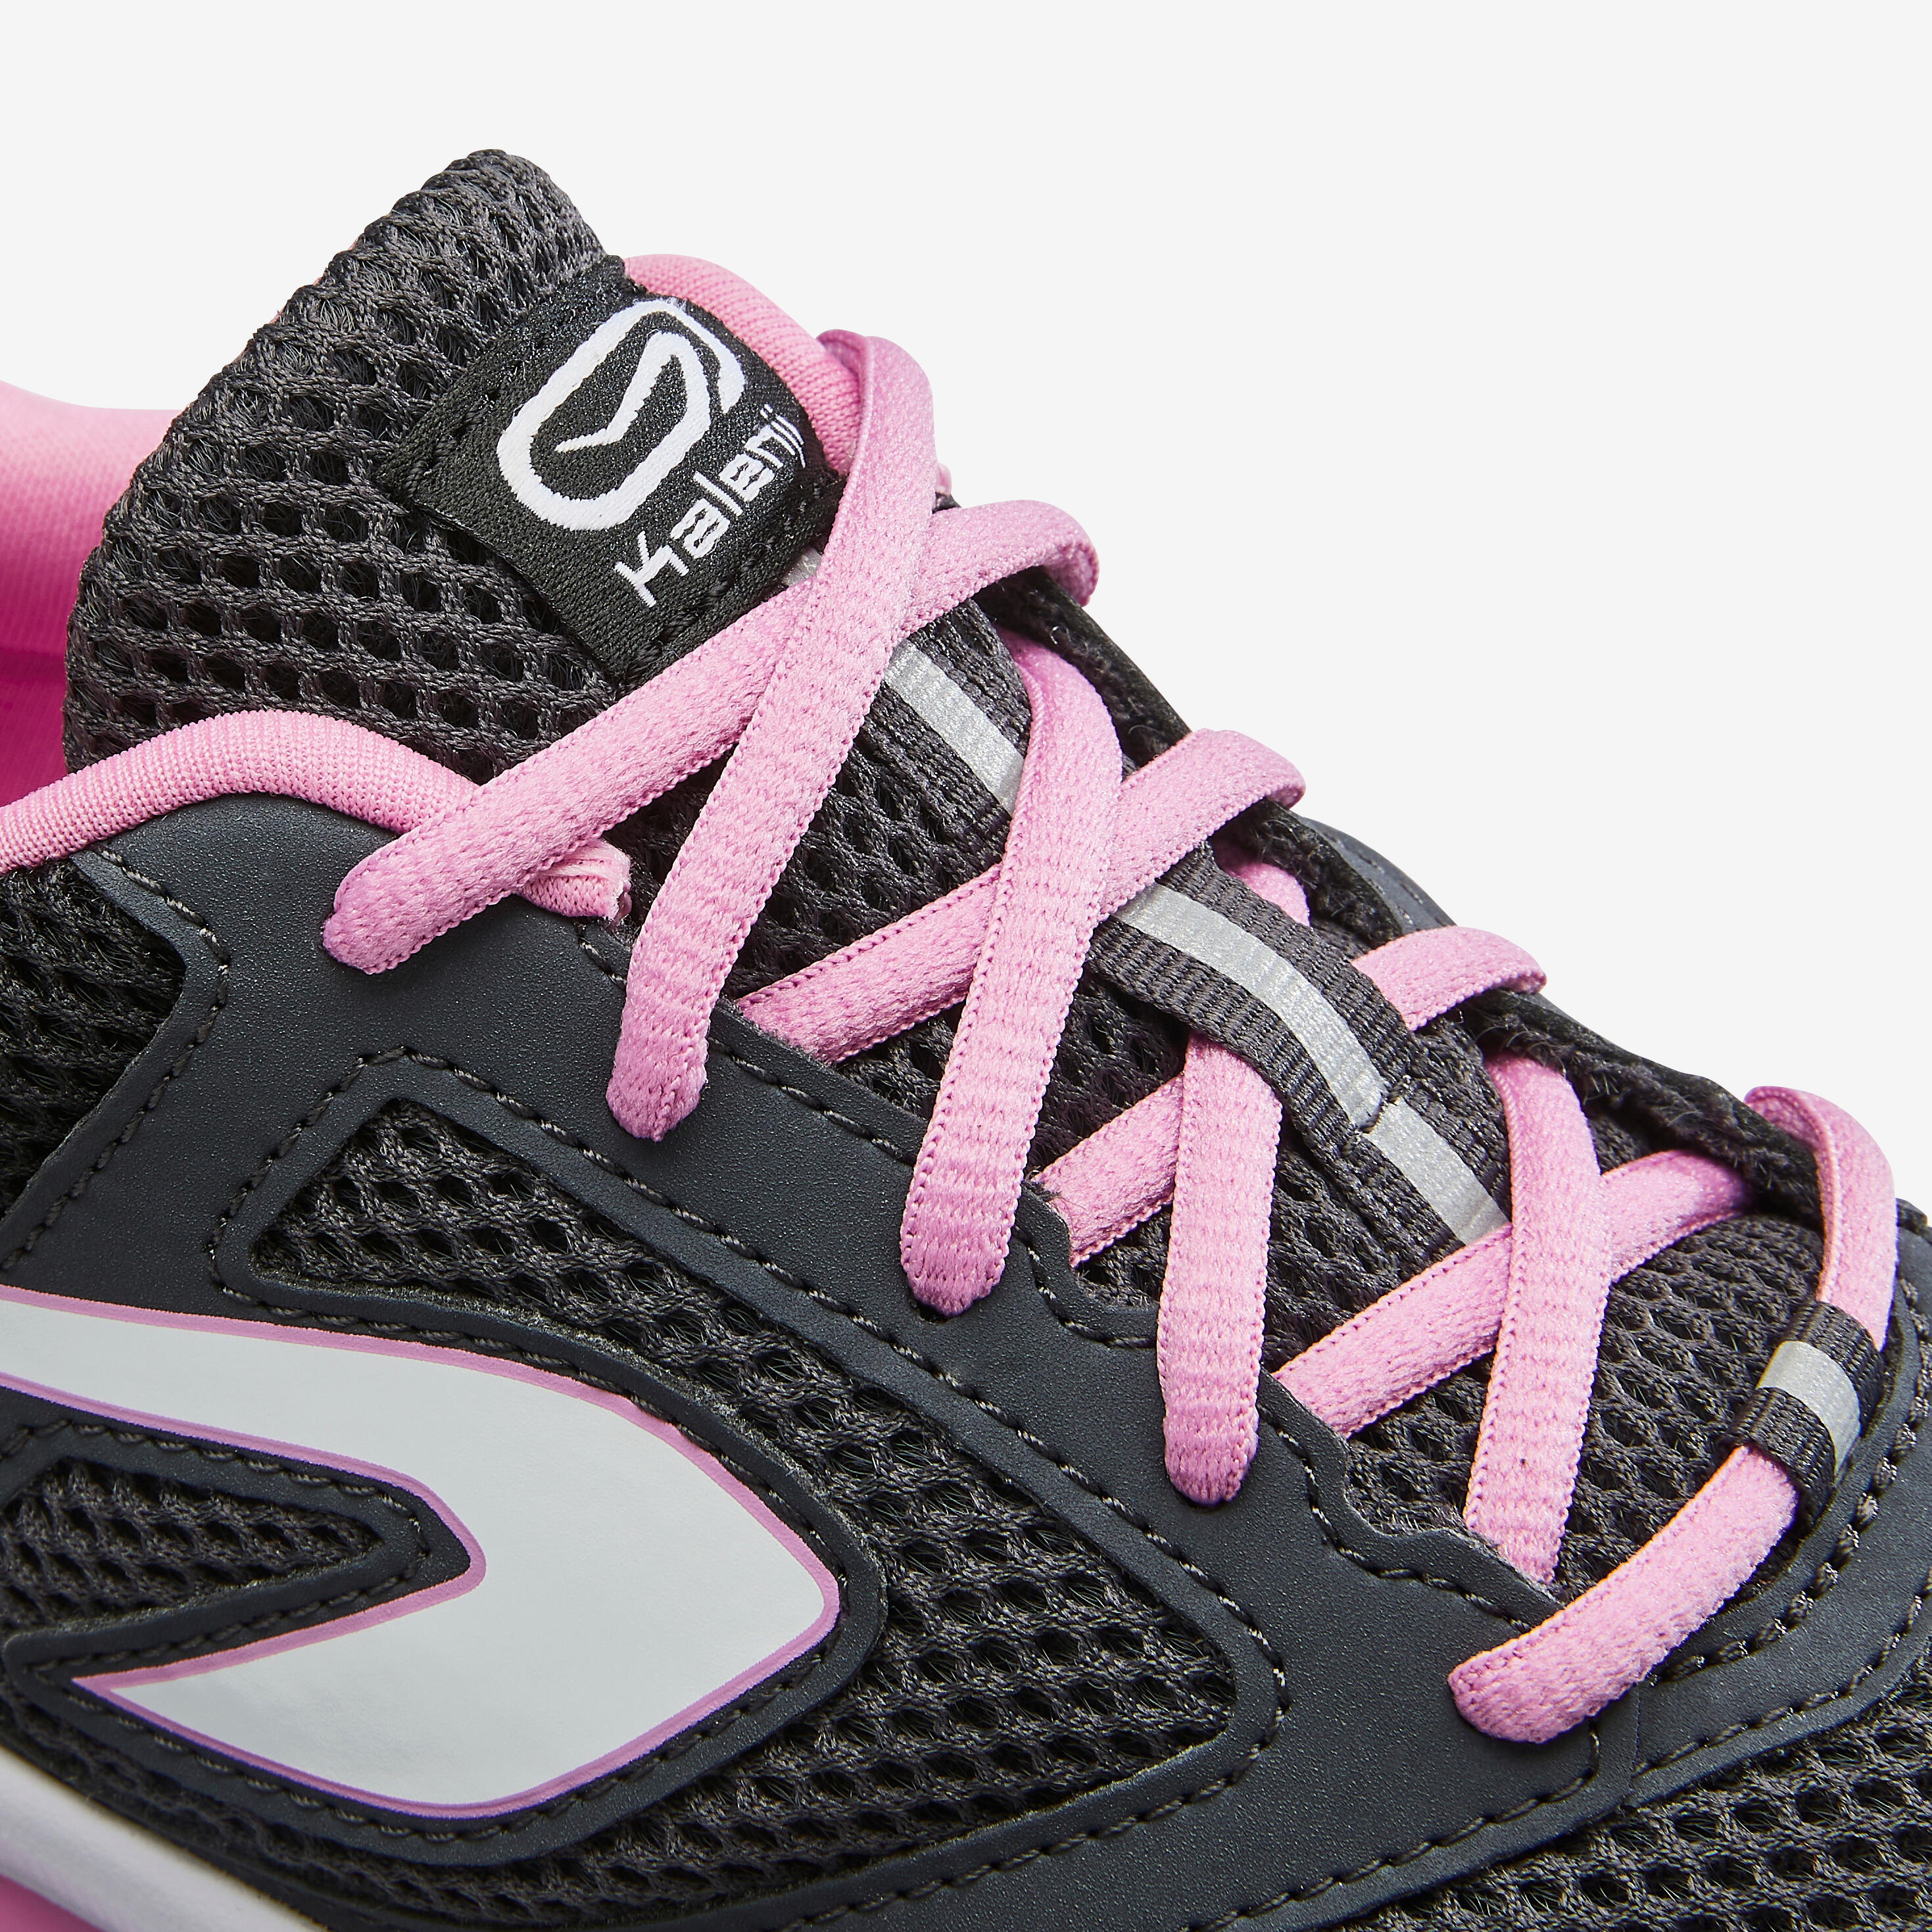 Run Active Women's Running Shoes - Black/Pink 7/7